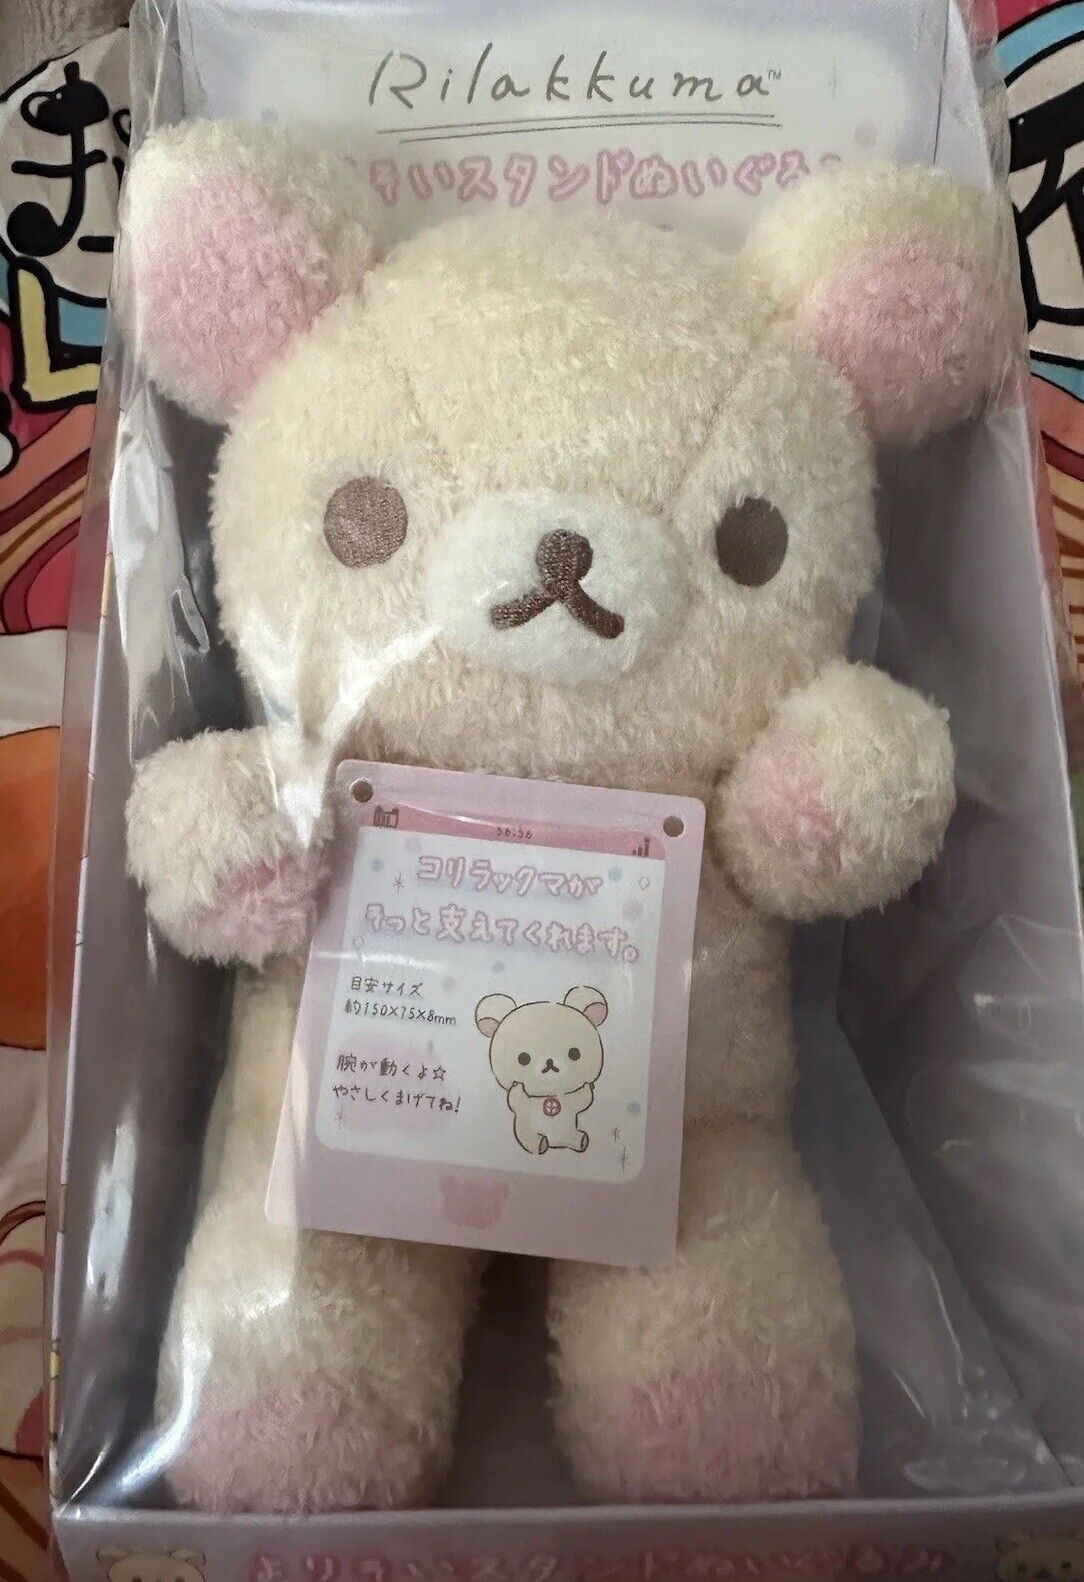 San-X Rilakkuma Stand Stuffed Toy ( Snuggling Up To You ) Korilakkuma Plush Doll